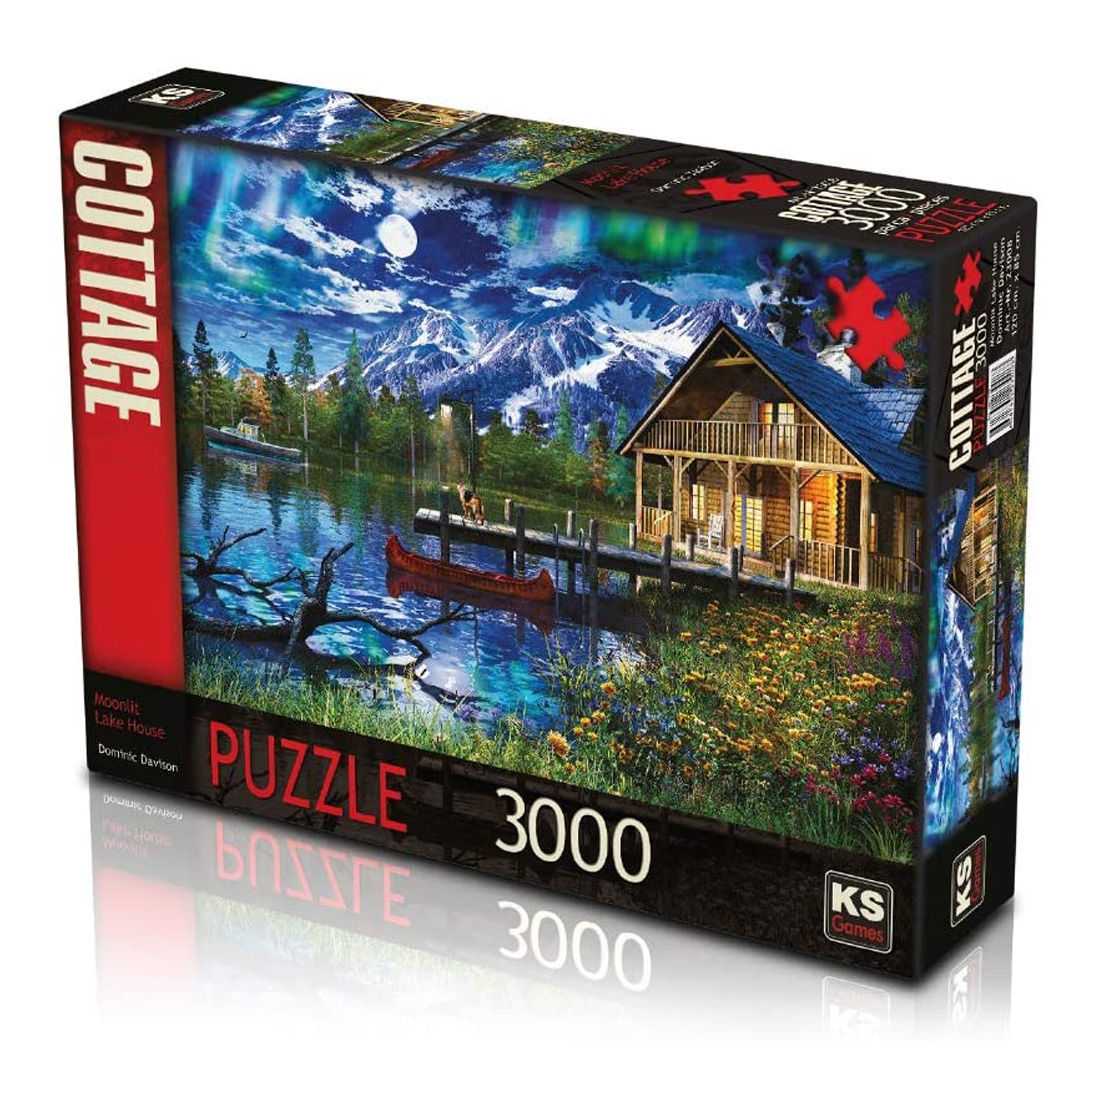 Puzzle 3000pcs moonlit lake house – Ks games